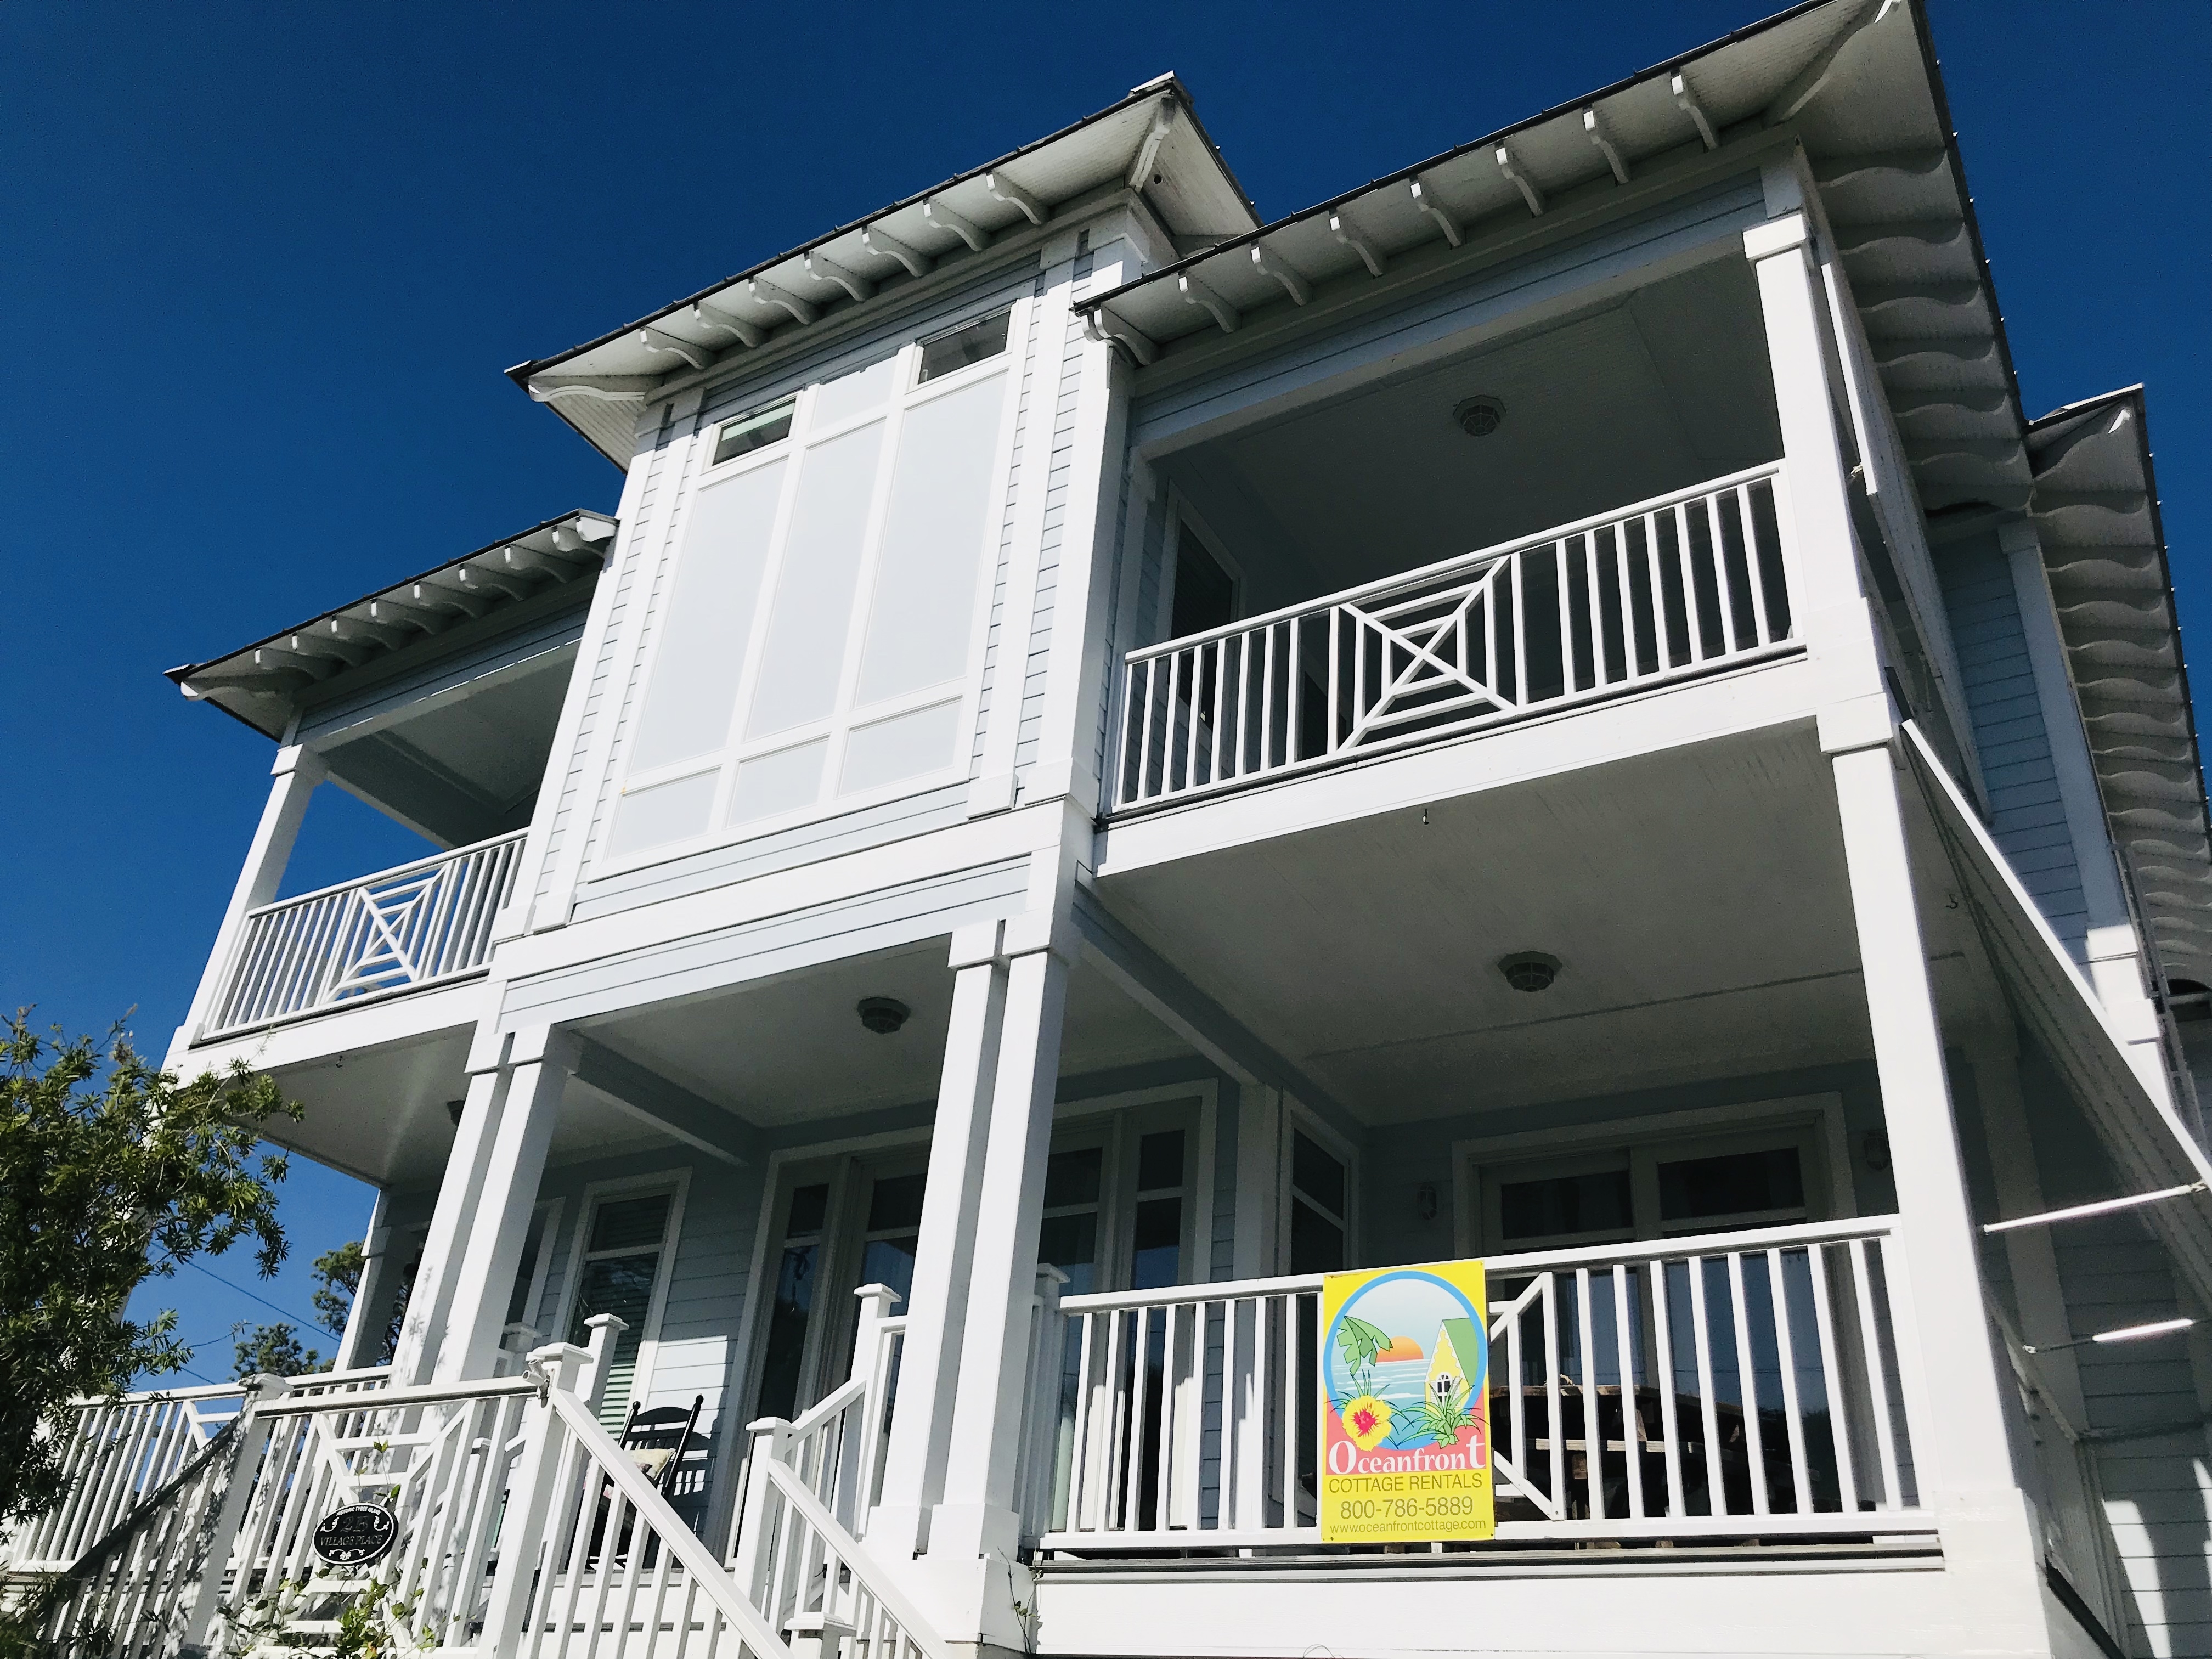 Paula Deen Tybee Island Beach House, Tybee Island Vacation Rentals, Paula Dean House, Tybee Island Vacation Planning